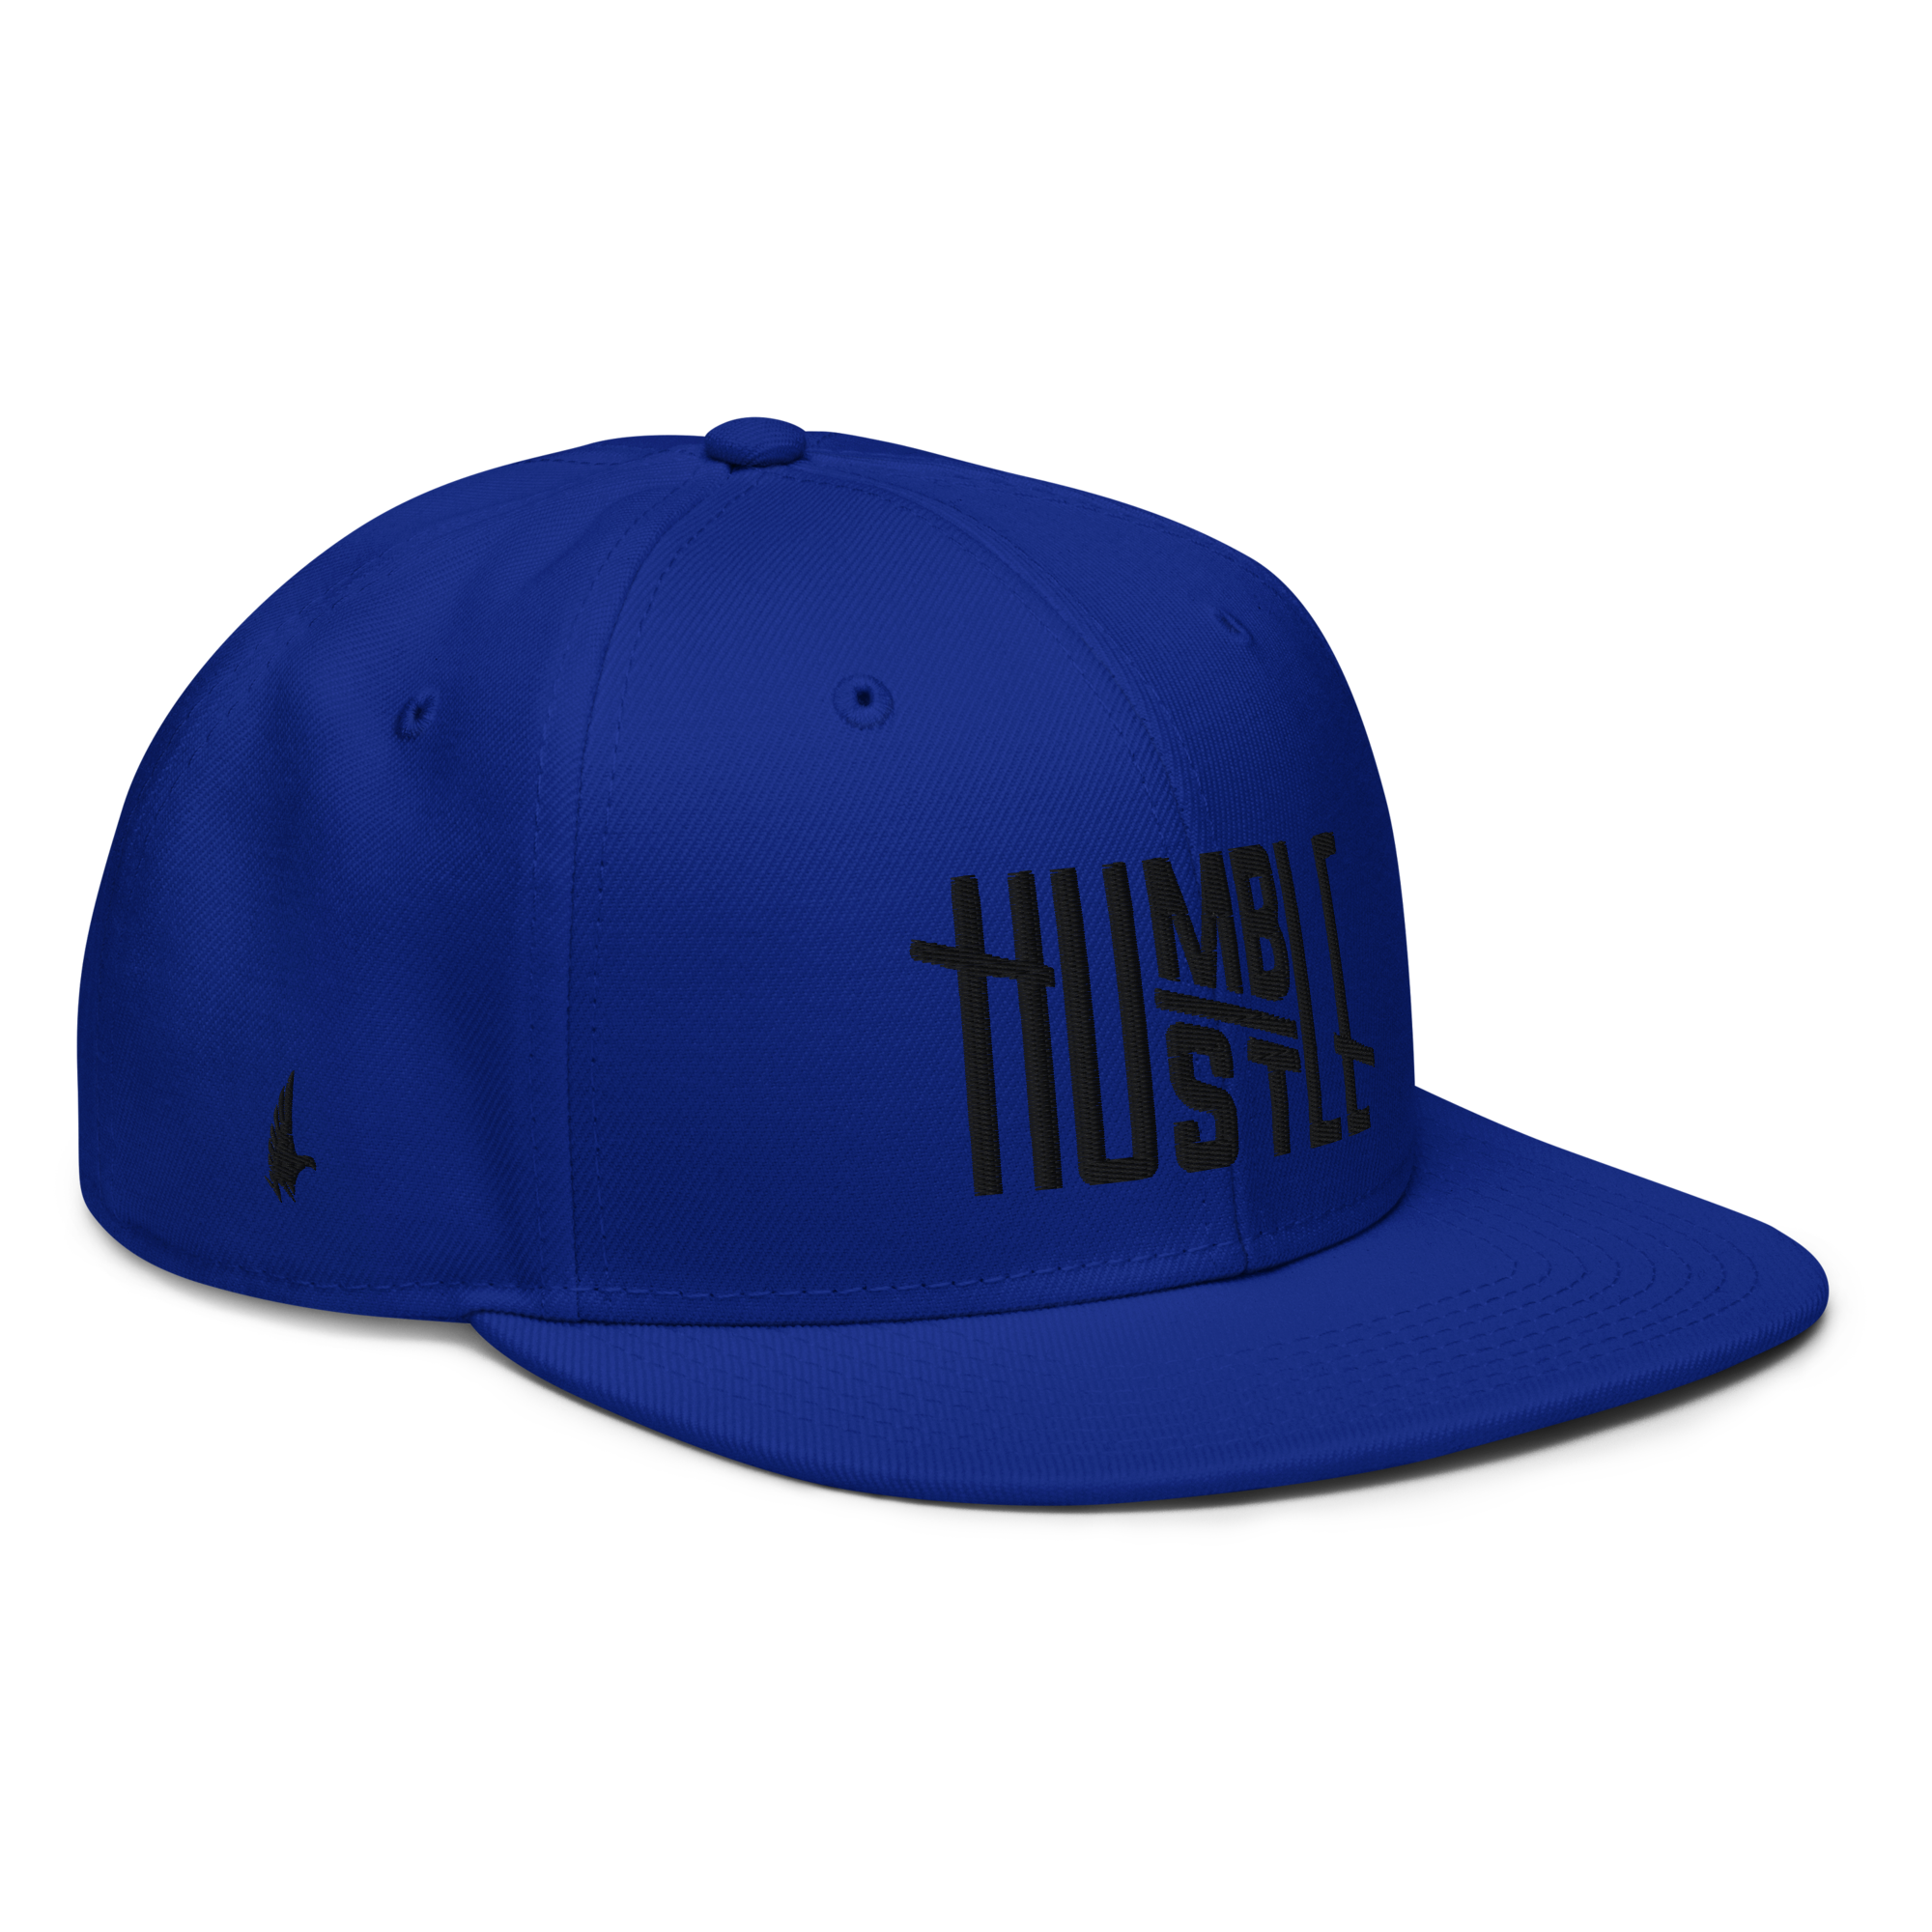 Humble Hustle Snapback Hat - Blue/Black OS - Loyalty Vibes